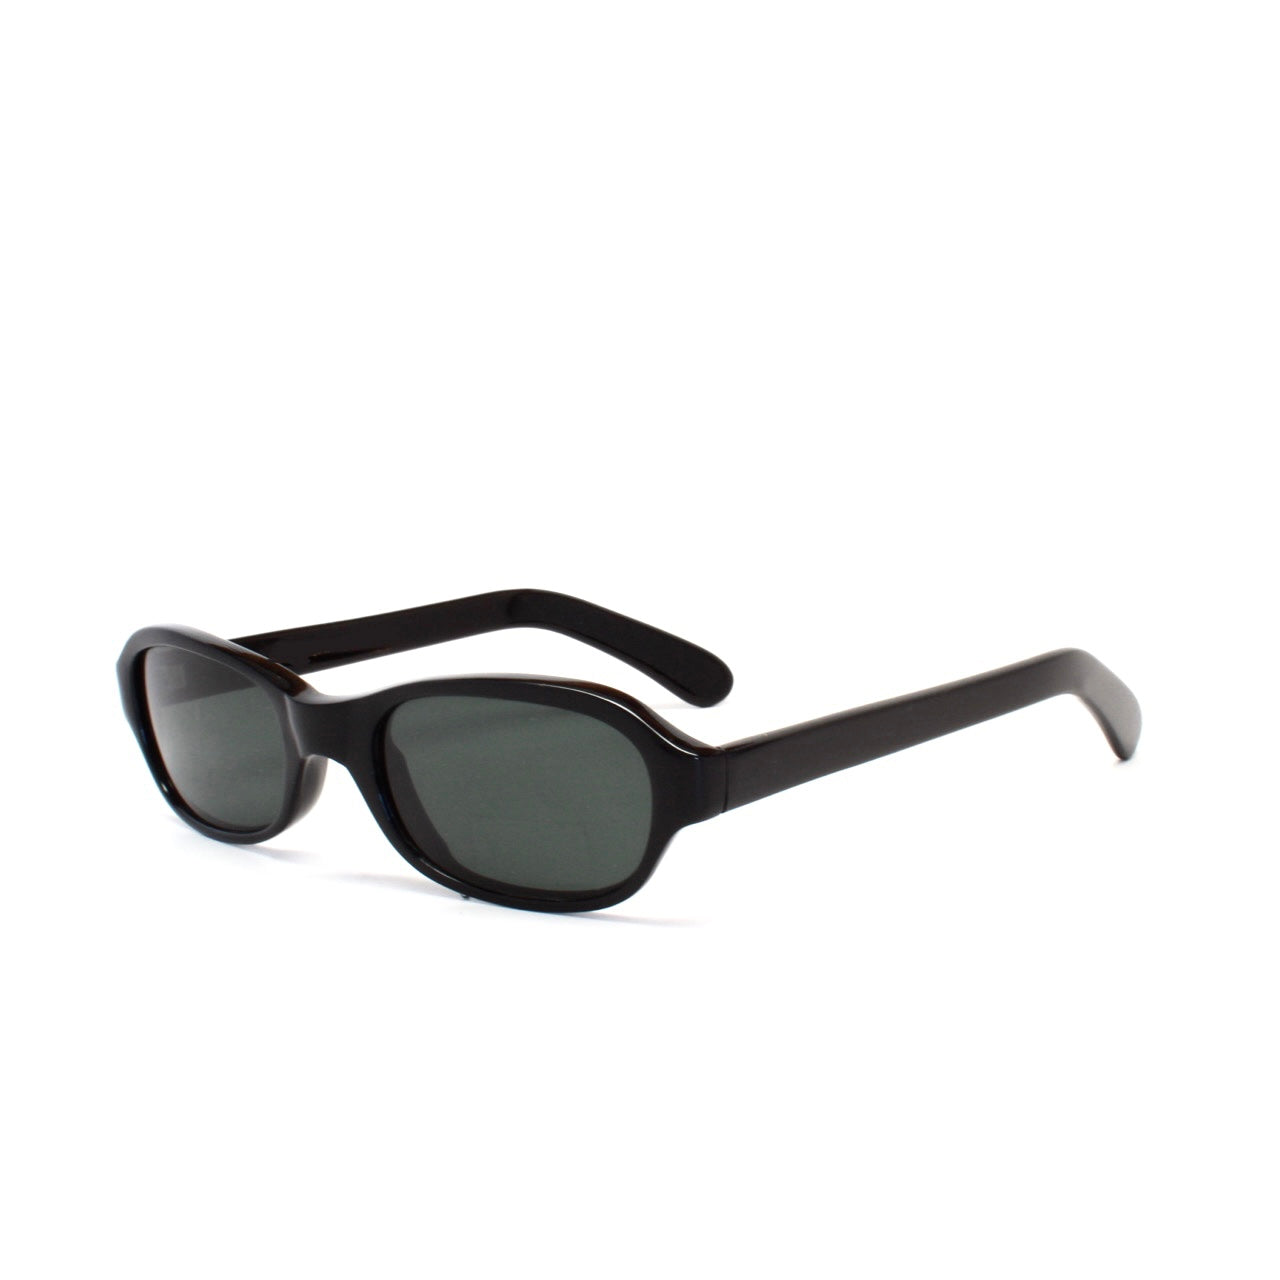 Vintage Standard Size 90s Mod Oval Frame Sunglasses - Black